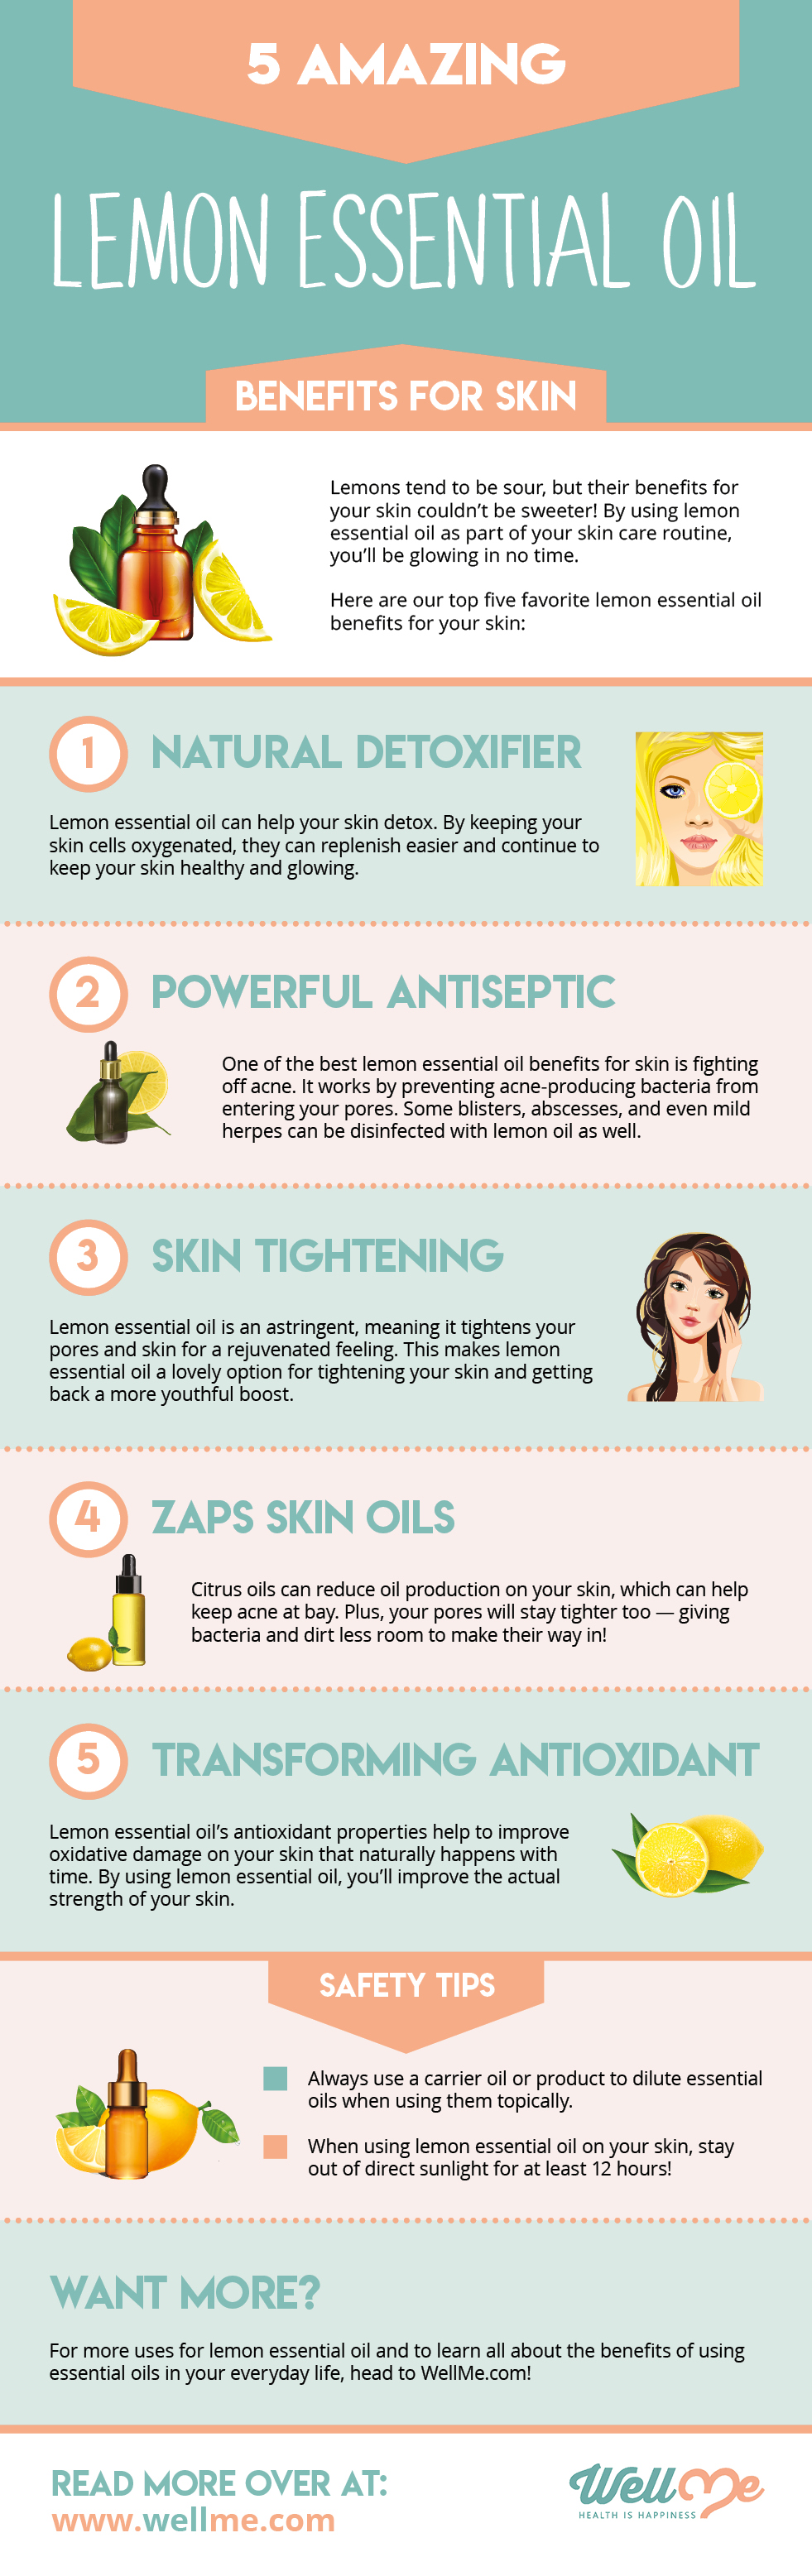 5 Amazing Lemon Essential Oil Benefits for Skin infographic